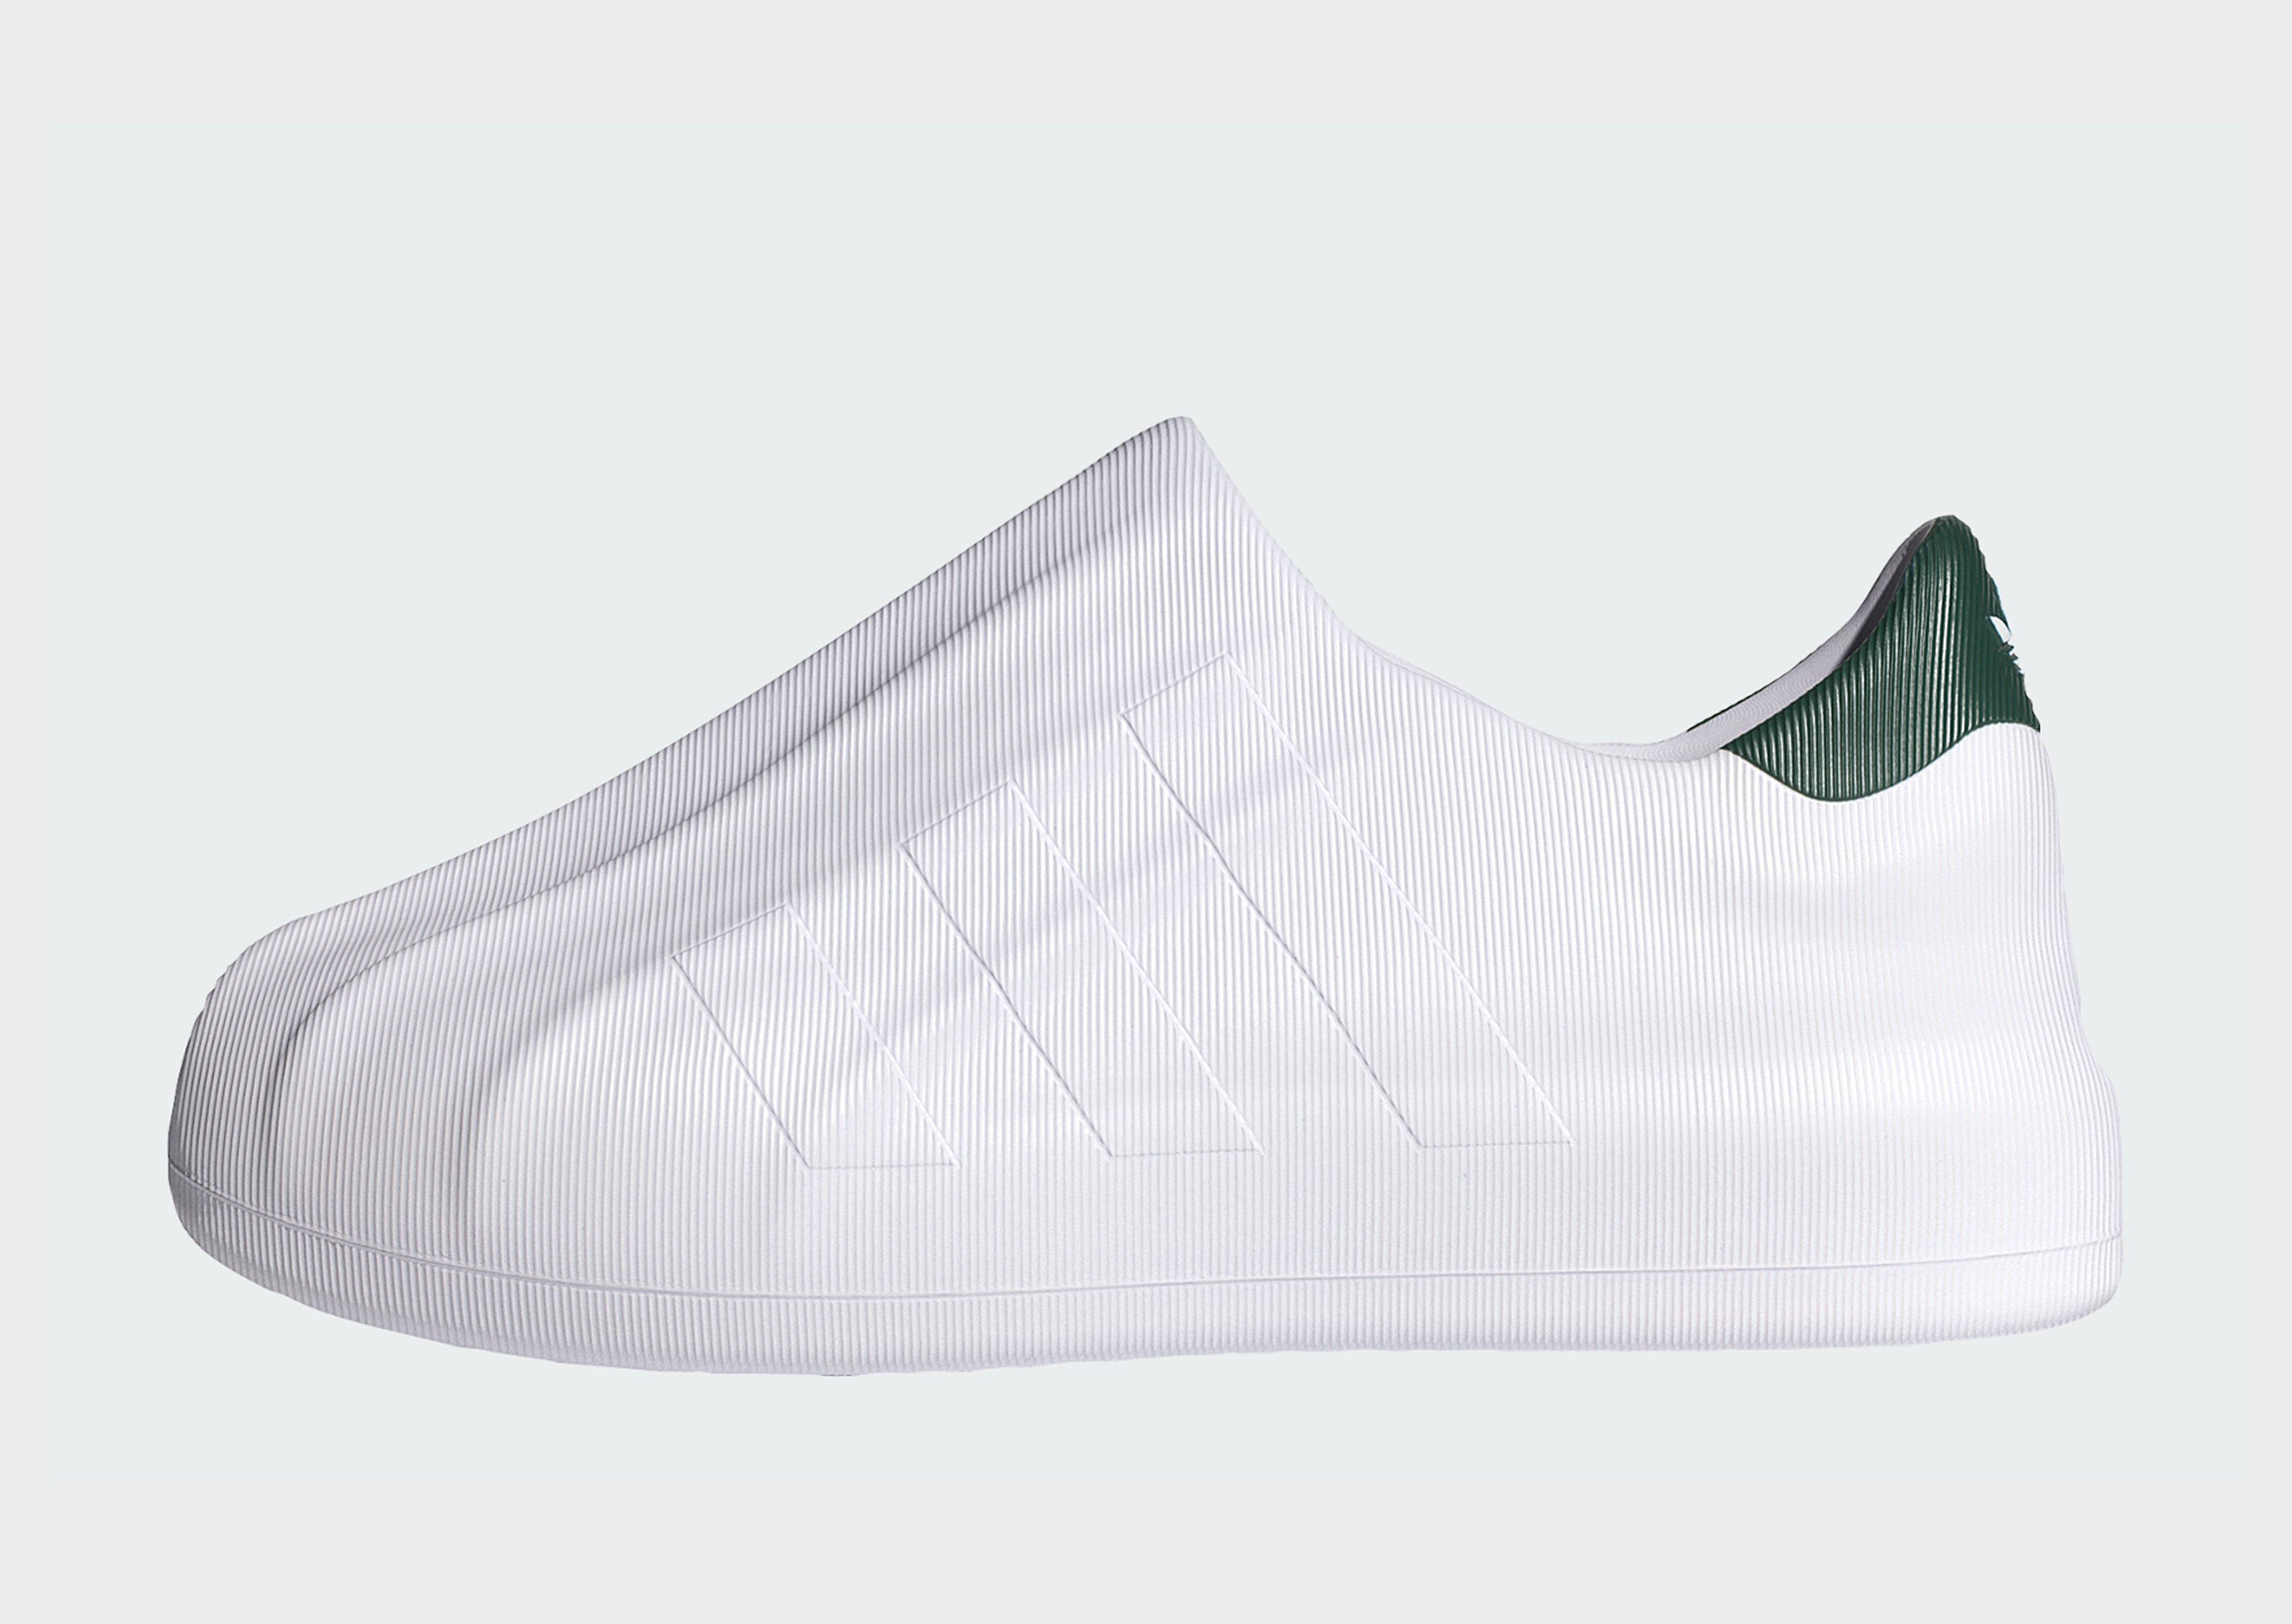 adidas Originals Superstar Shoes: adiFOM Slip On & Sneakers - JD Sports  Australia